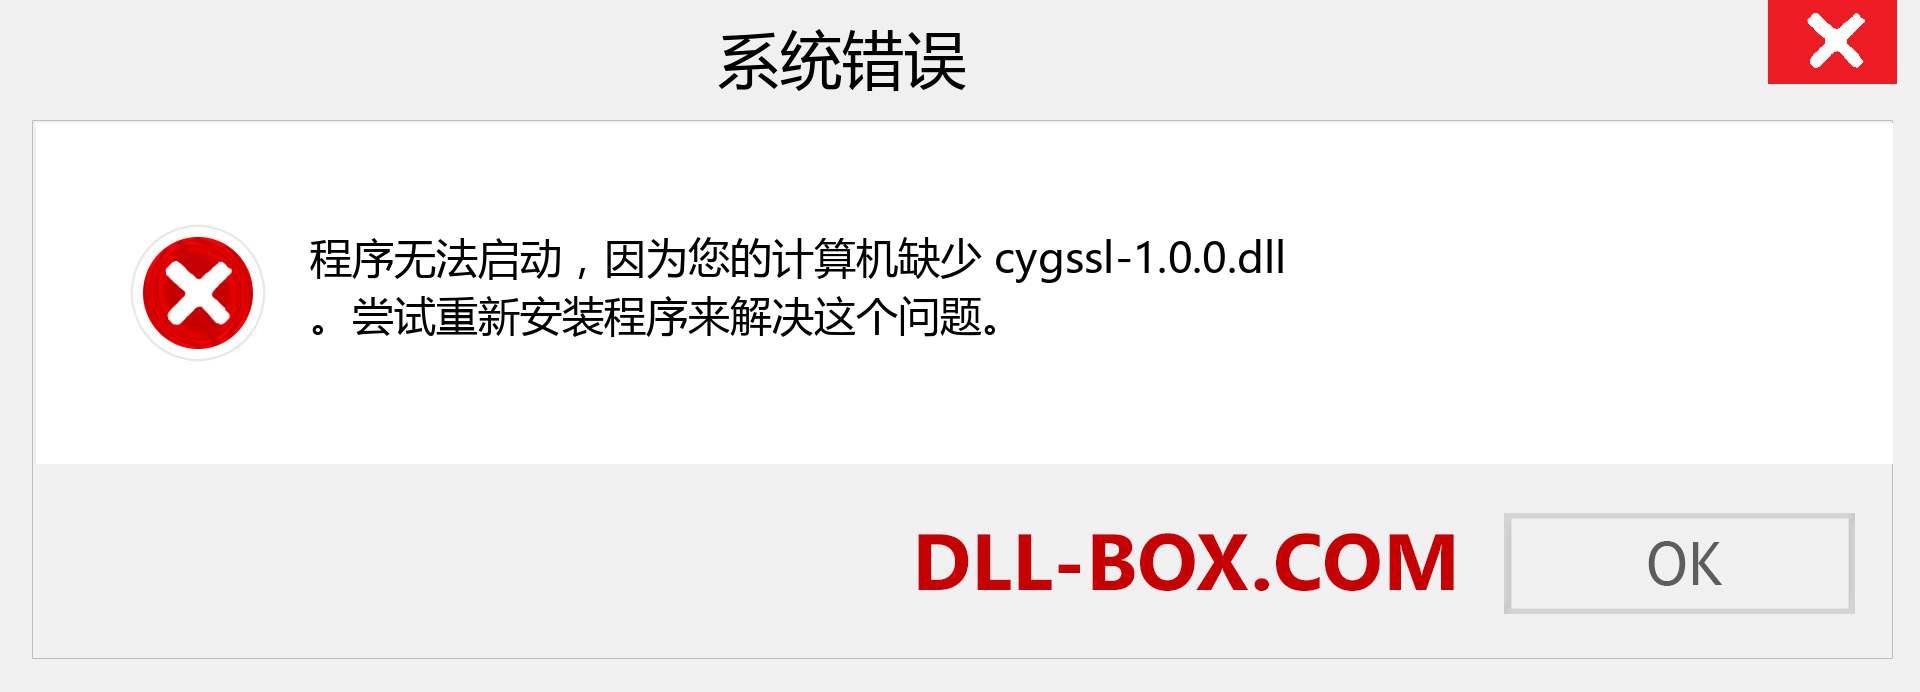 cygssl-1.0.0.dll 文件丢失？。 适用于 Windows 7、8、10 的下载 - 修复 Windows、照片、图像上的 cygssl-1.0.0 dll 丢失错误